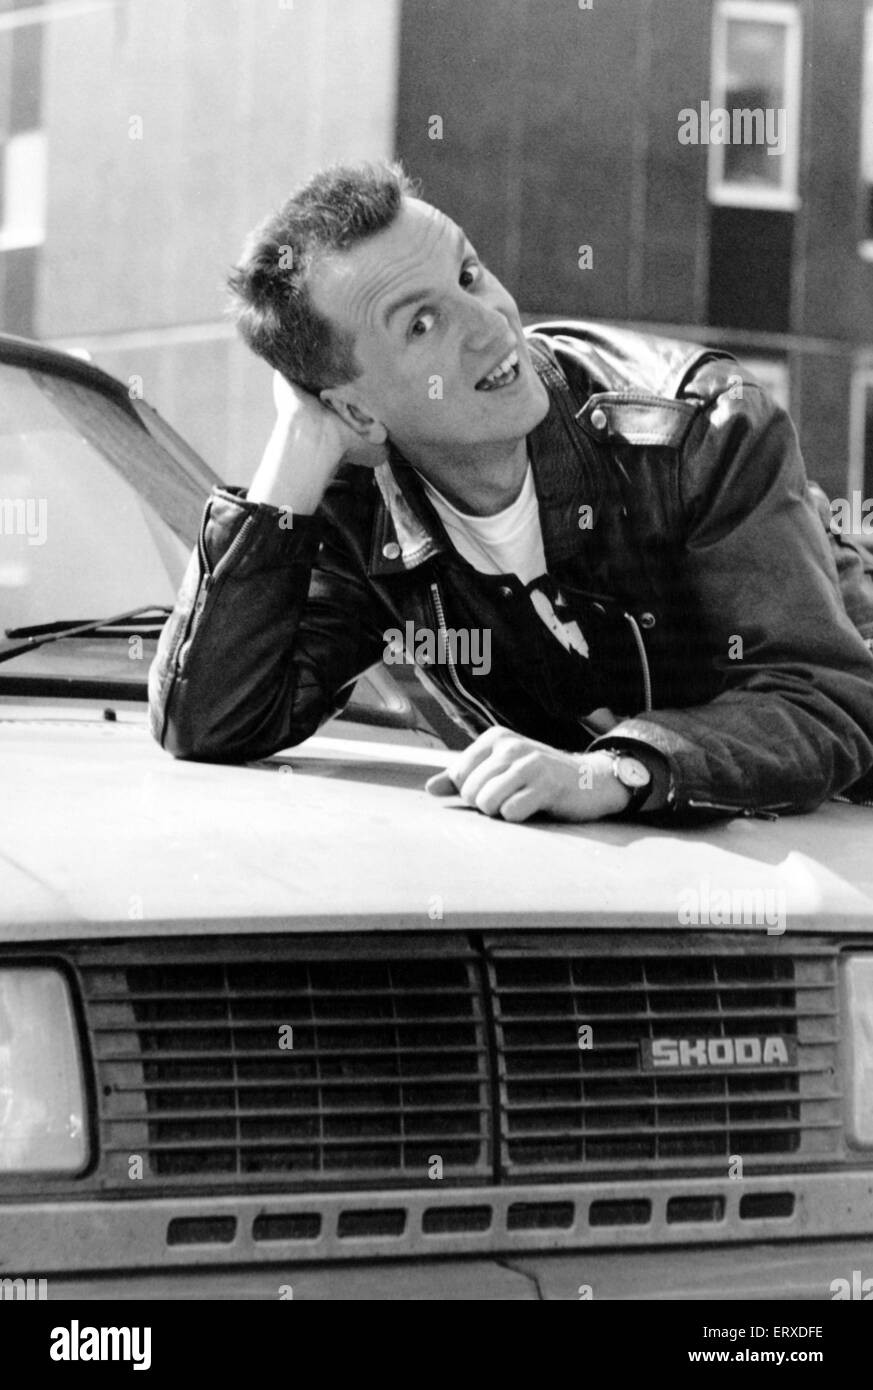 Comedian Frank Skinner who has just returned from the Edinburgh Festival, leaning on a car bonnet, 7th September 1990. Stock Photo